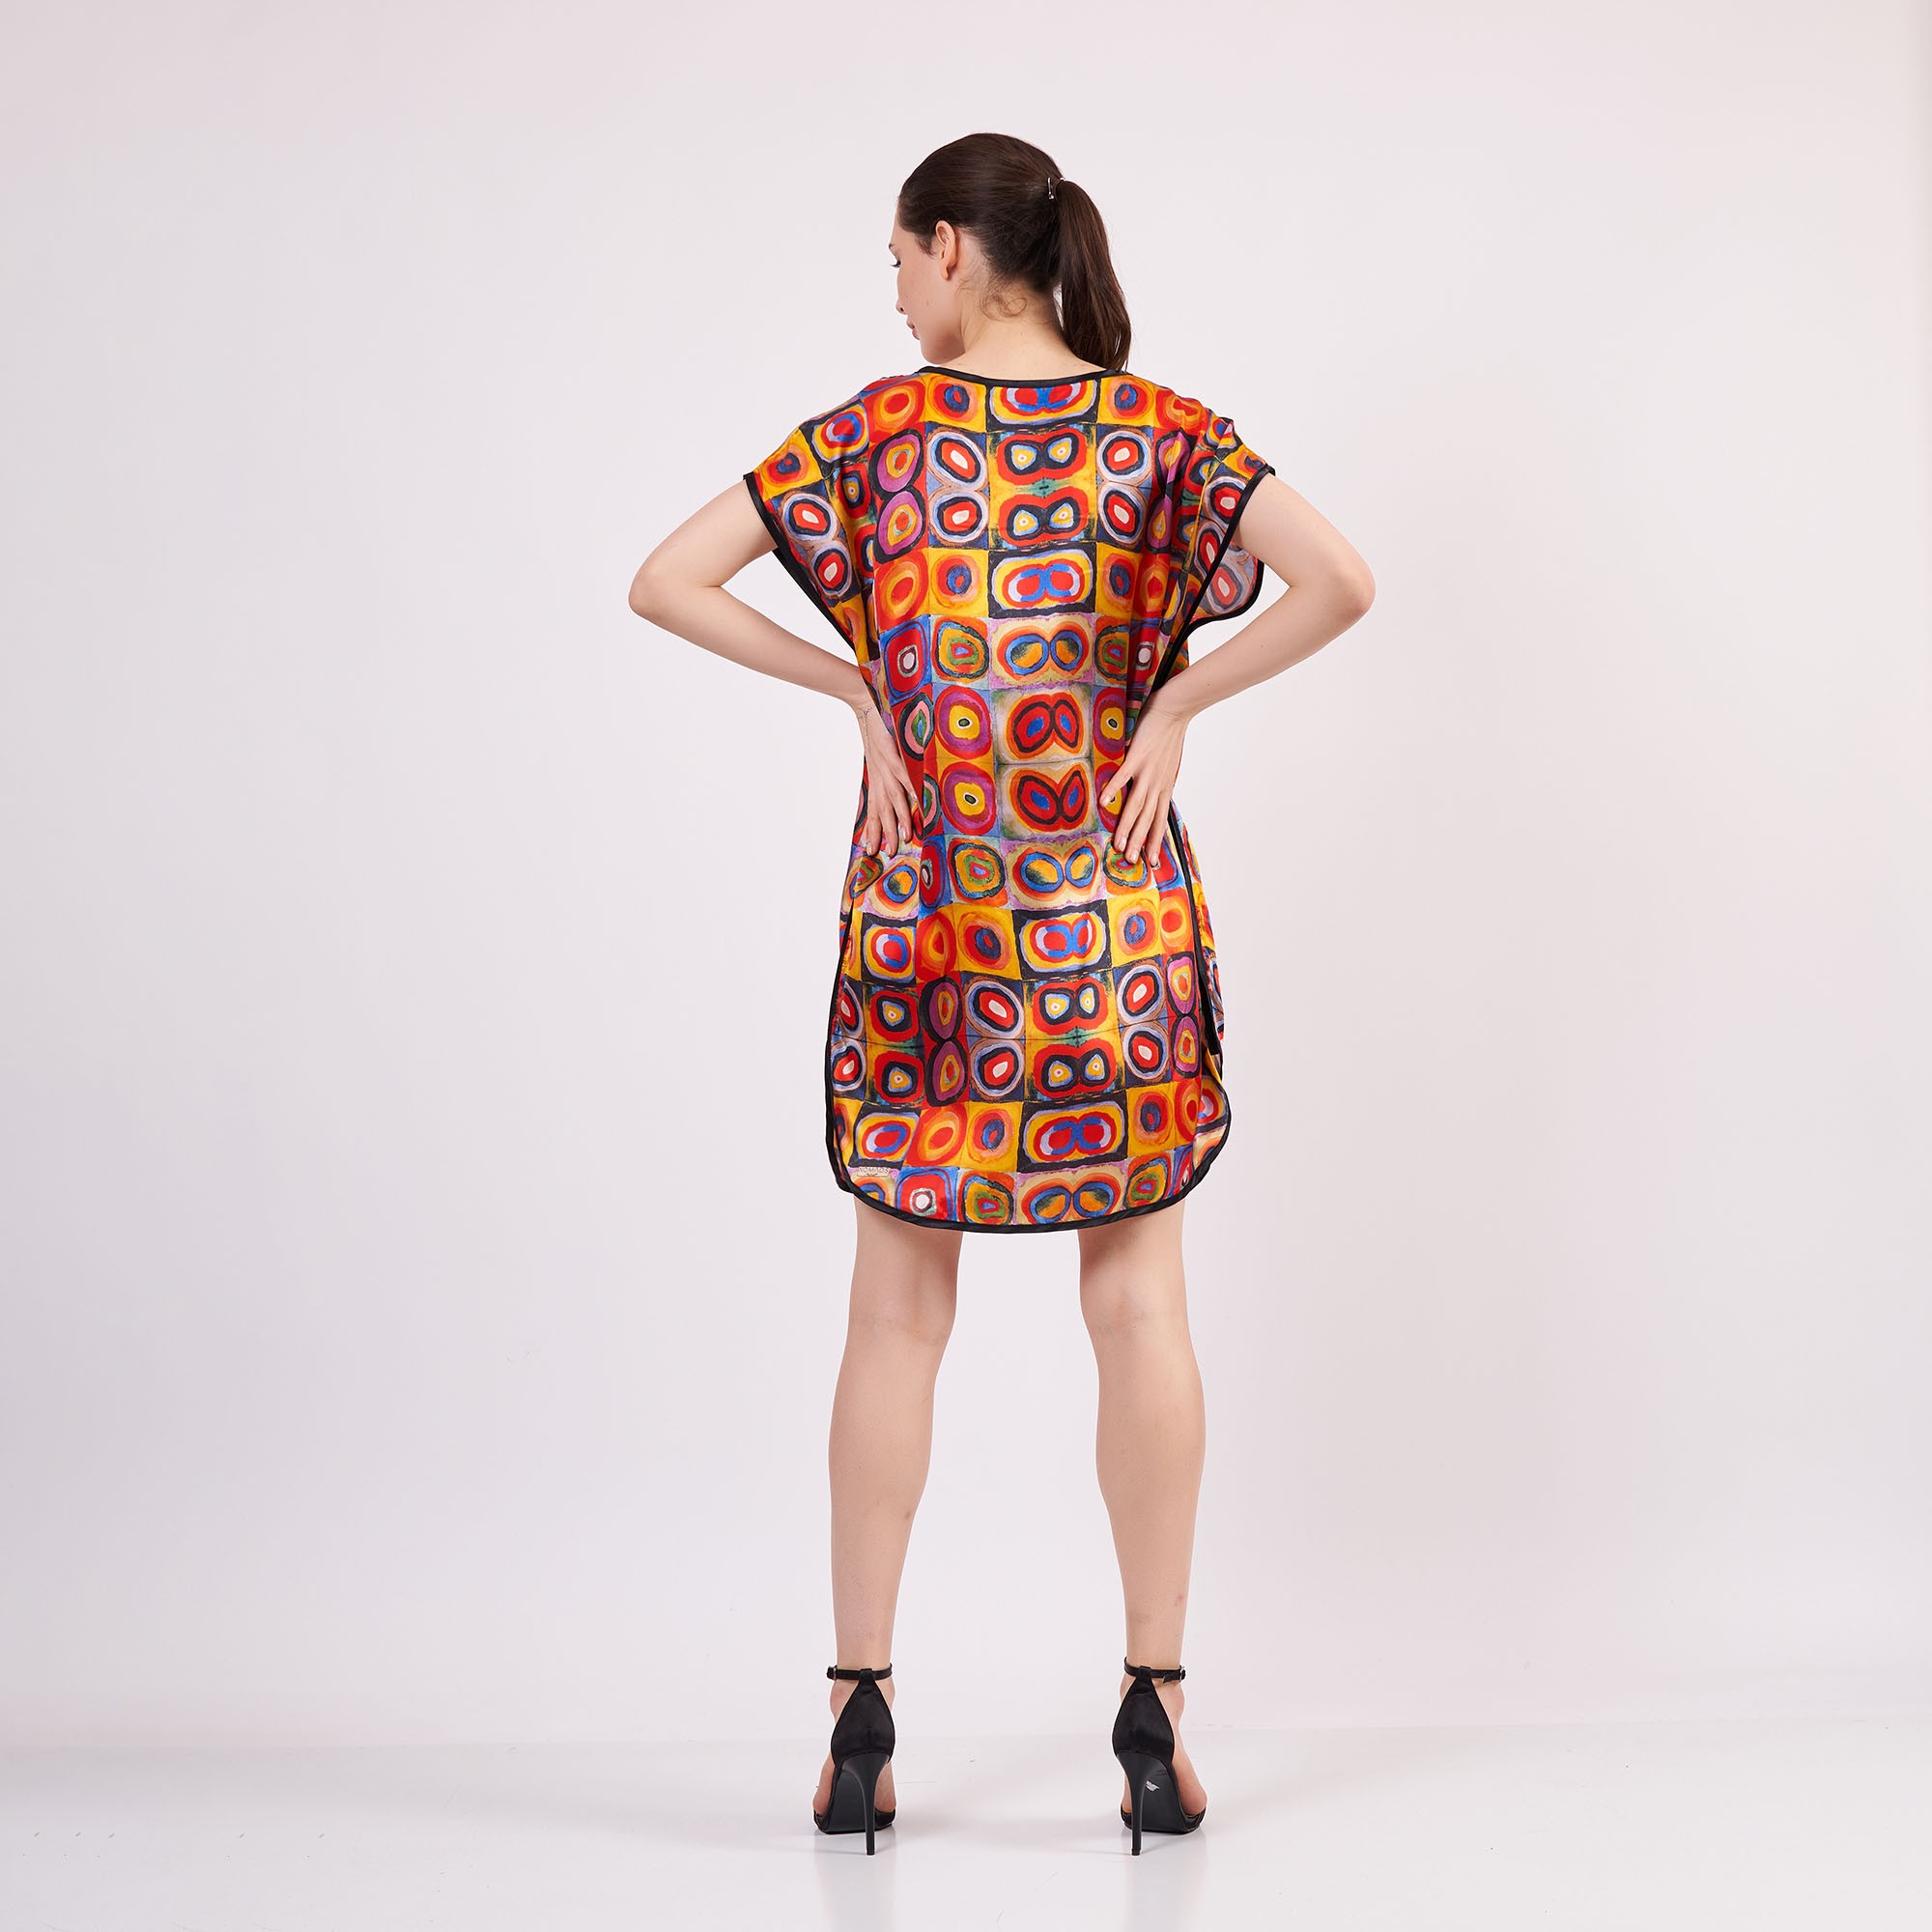 Pure Silk Plus Size Short Dress For Women | Oversized Short Kaftan Kandinsky Squares with Circles | Loose Fitting Dress